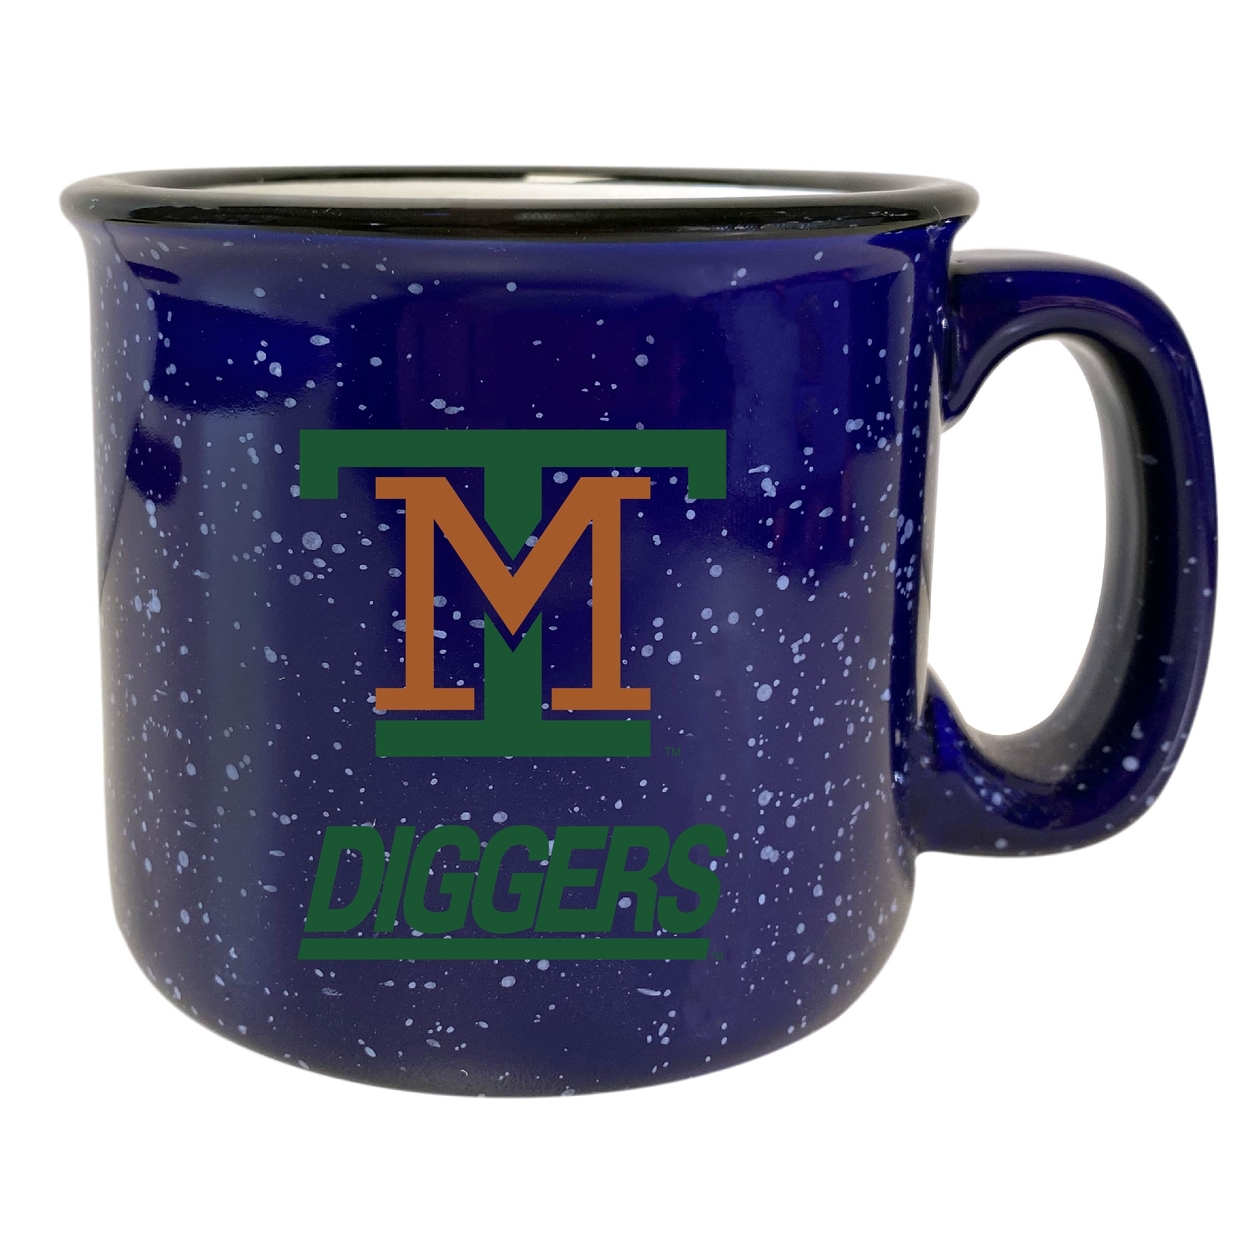 Montana Tech Speckled Ceramic Camper Coffee Mug - Choose Your Color - Navy